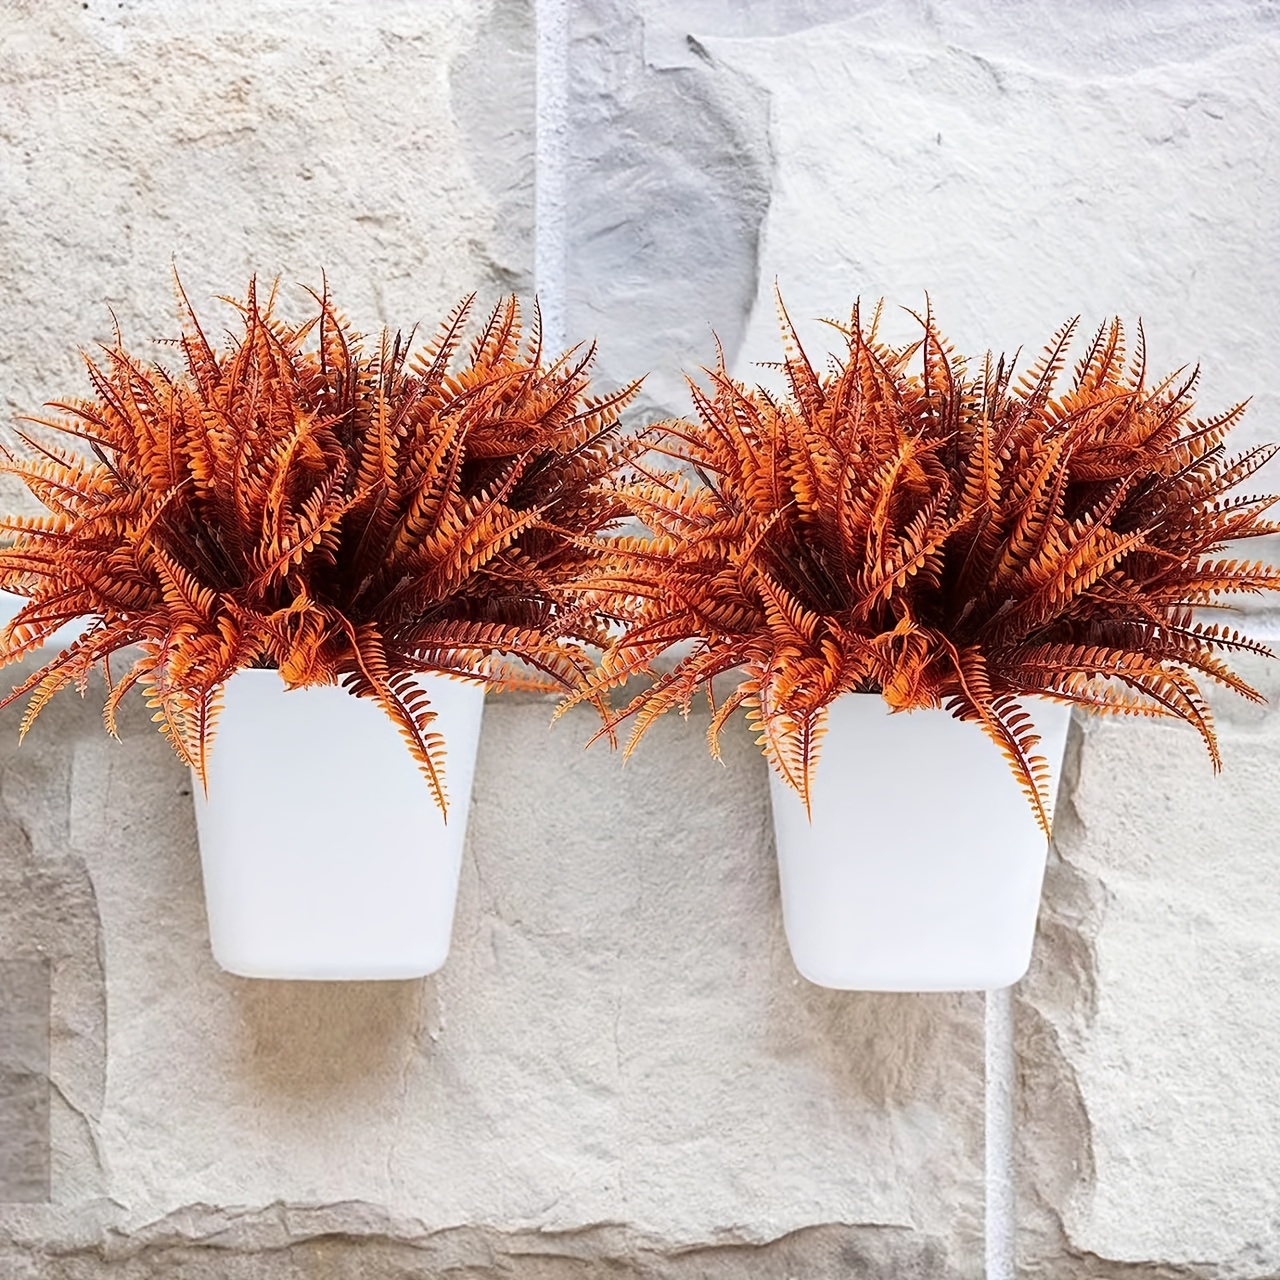 Artificial Ferns Home Decoration, Outdoor Artificial Plants